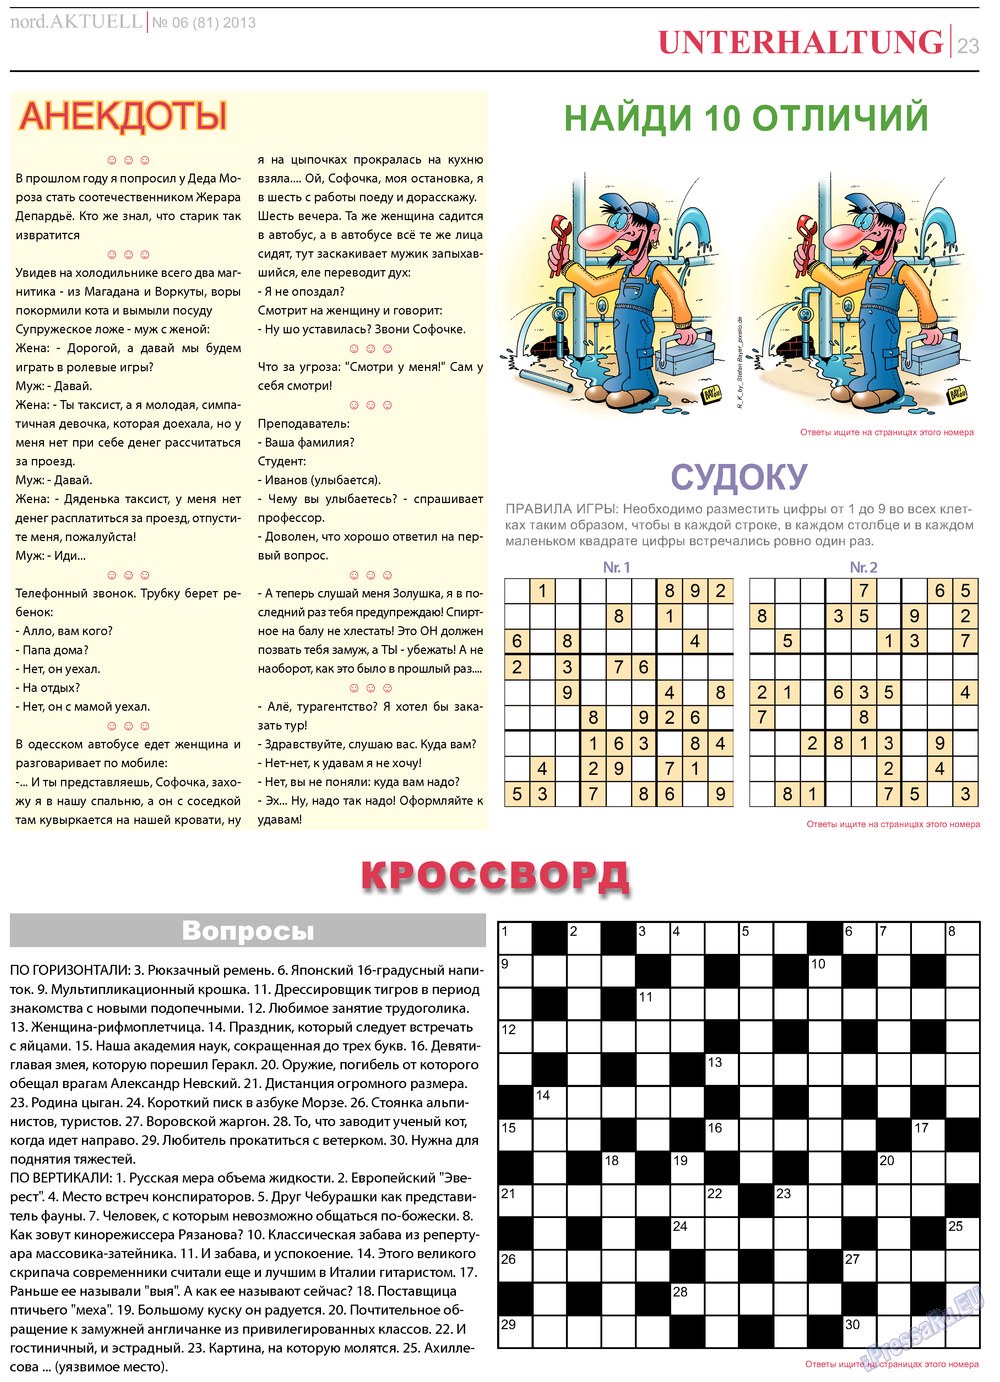 nord.Aktuell, газета. 2013 №6 стр.23